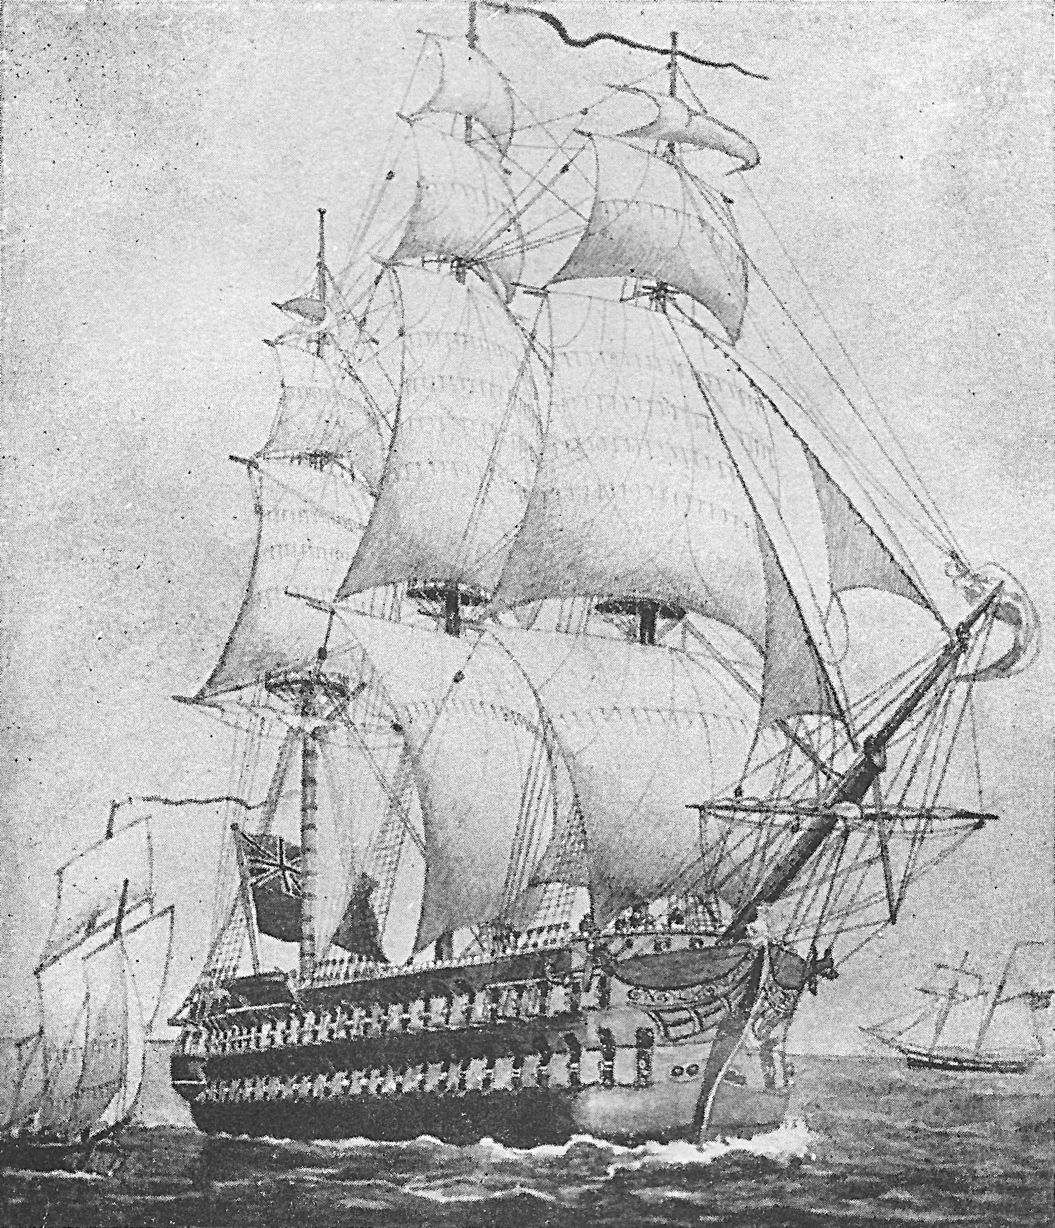 [Sir James Yeo's Flagship, 1814]